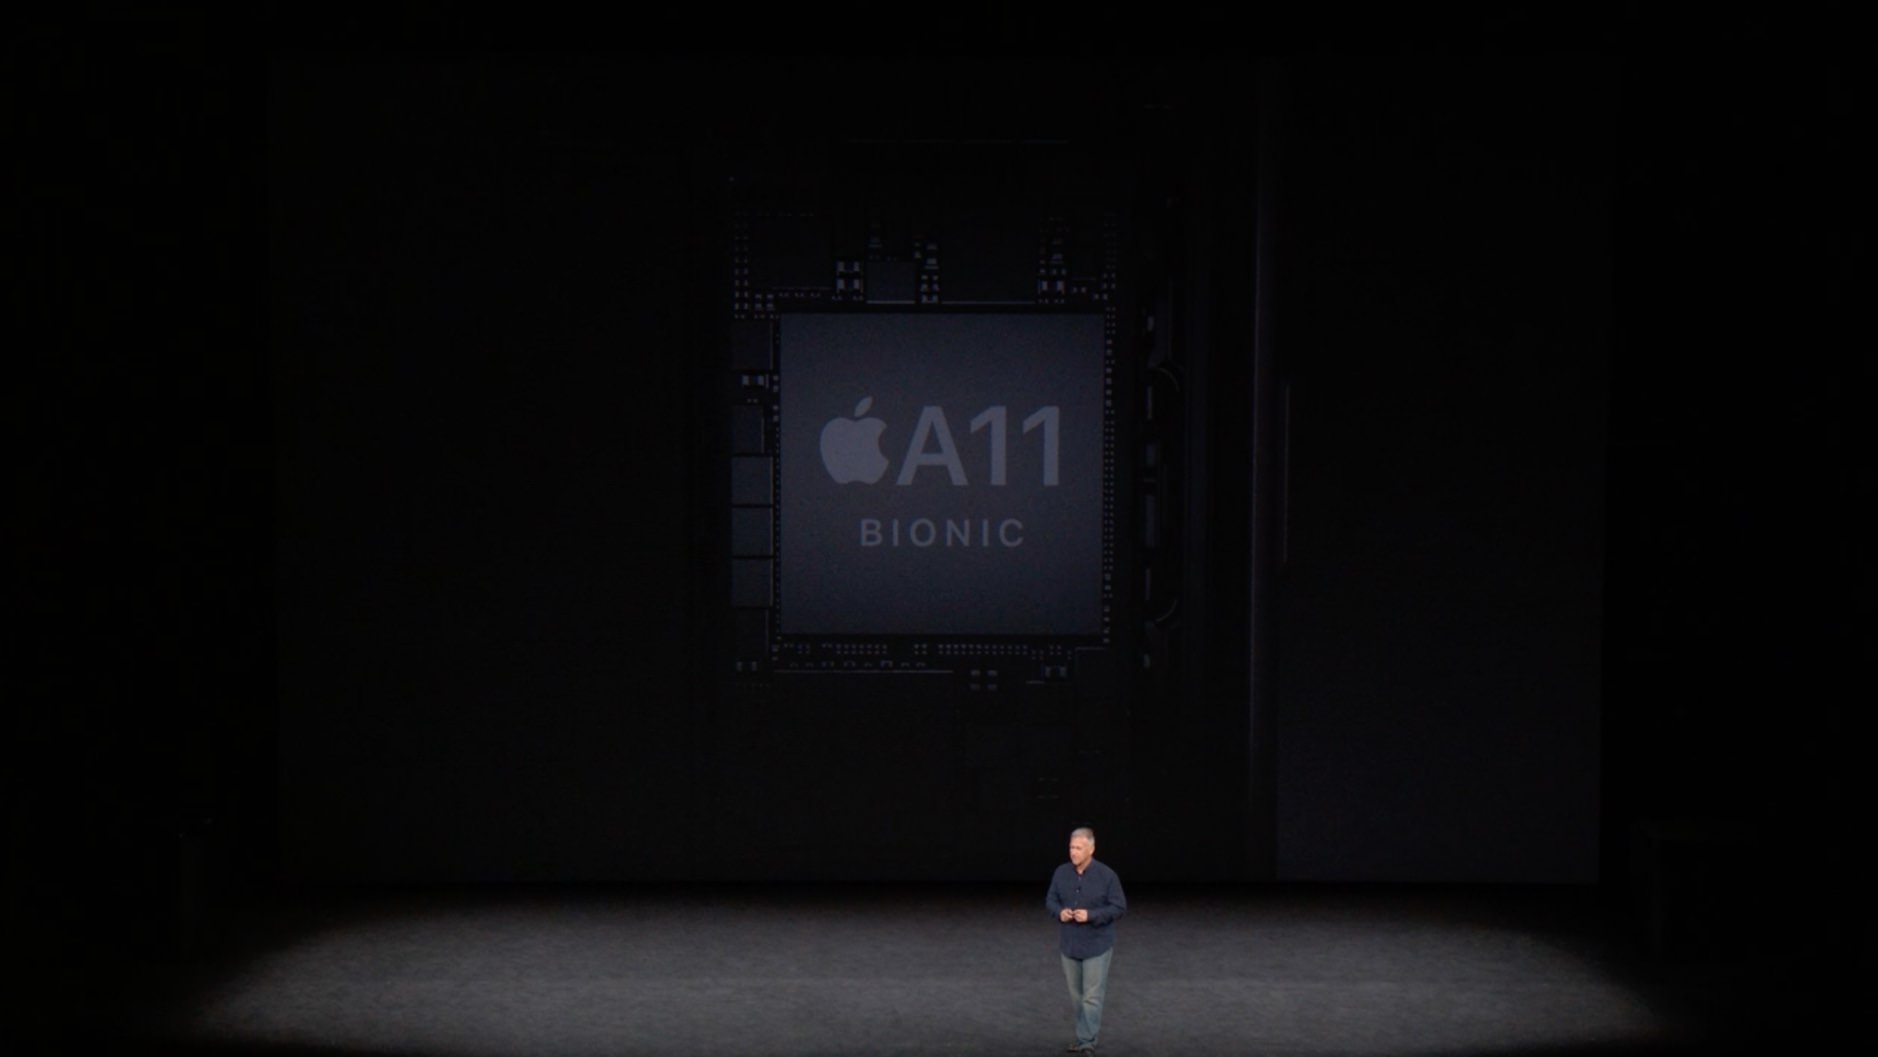 ?Steve Jobs? legacy & The iPhone X?